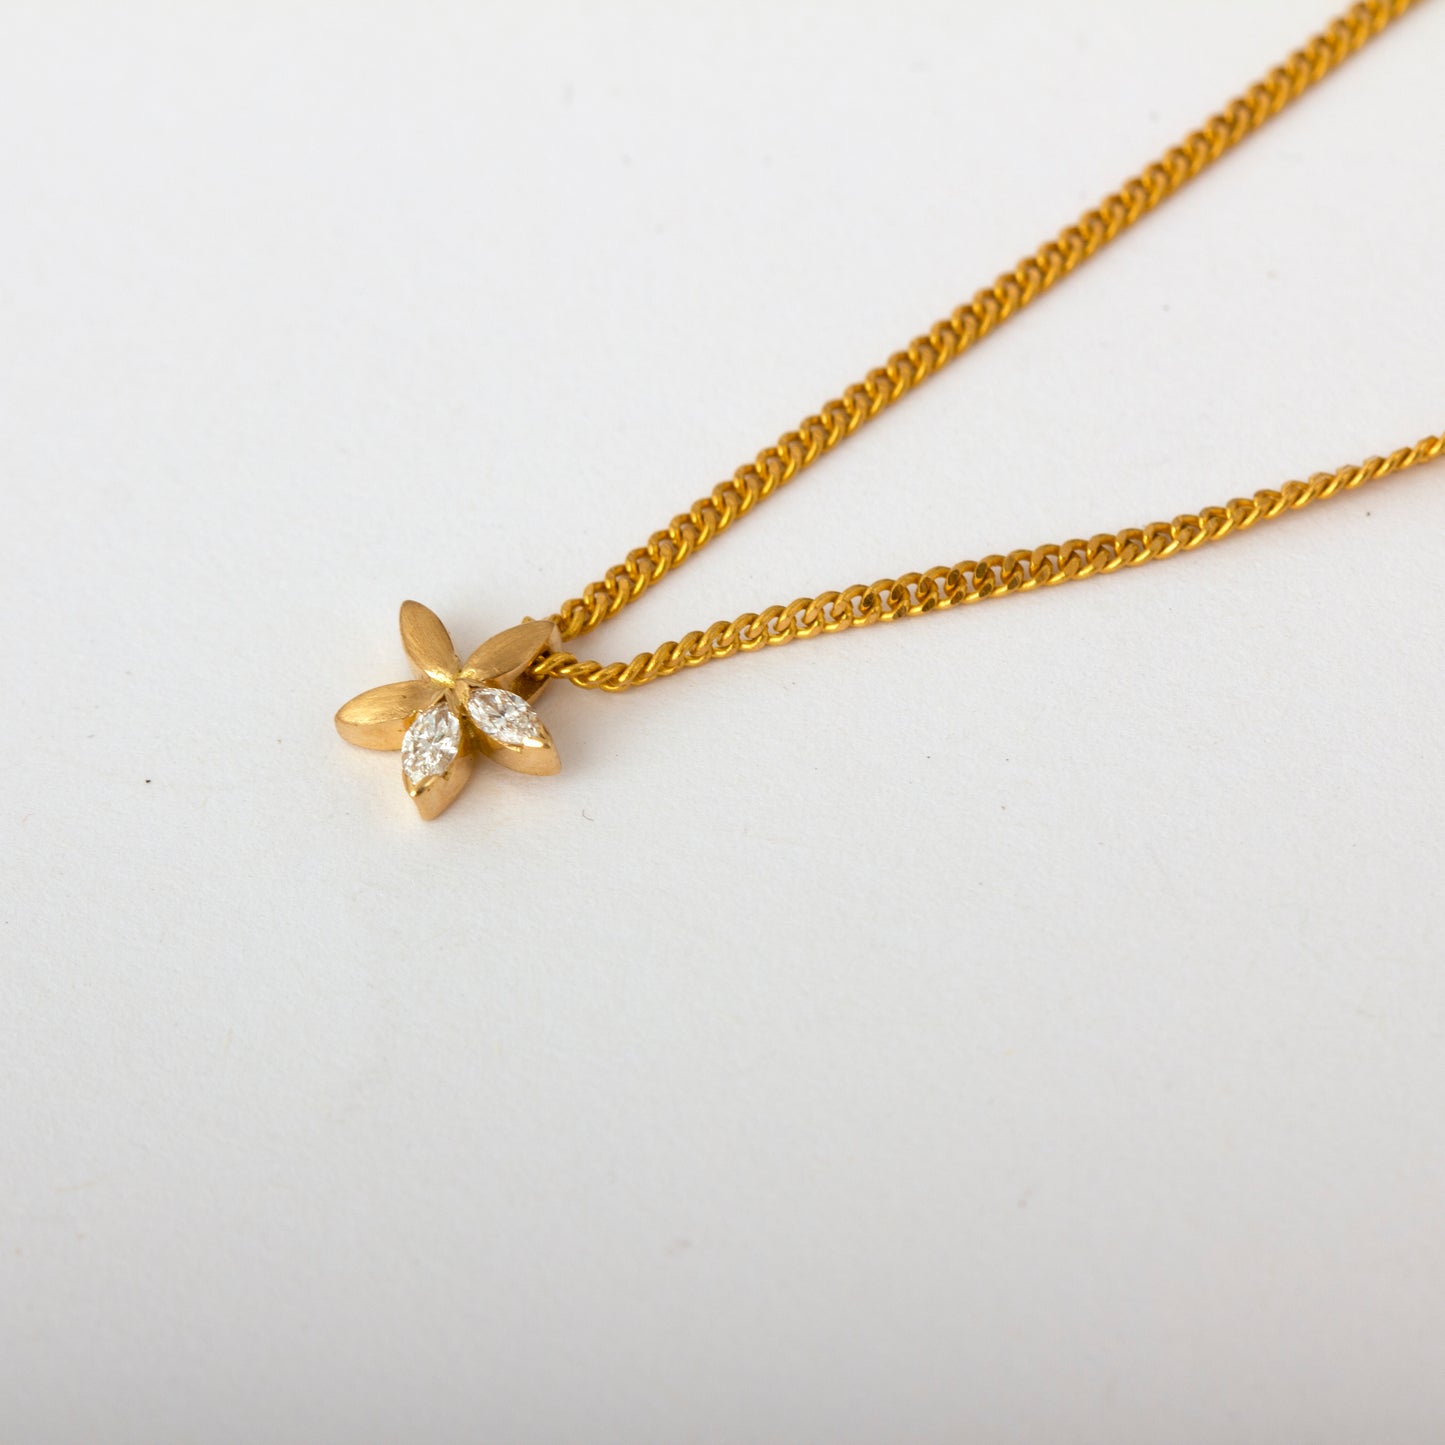 The Babyrasa Pavi Floral Gold and Diamond Pendant by Rasvihar